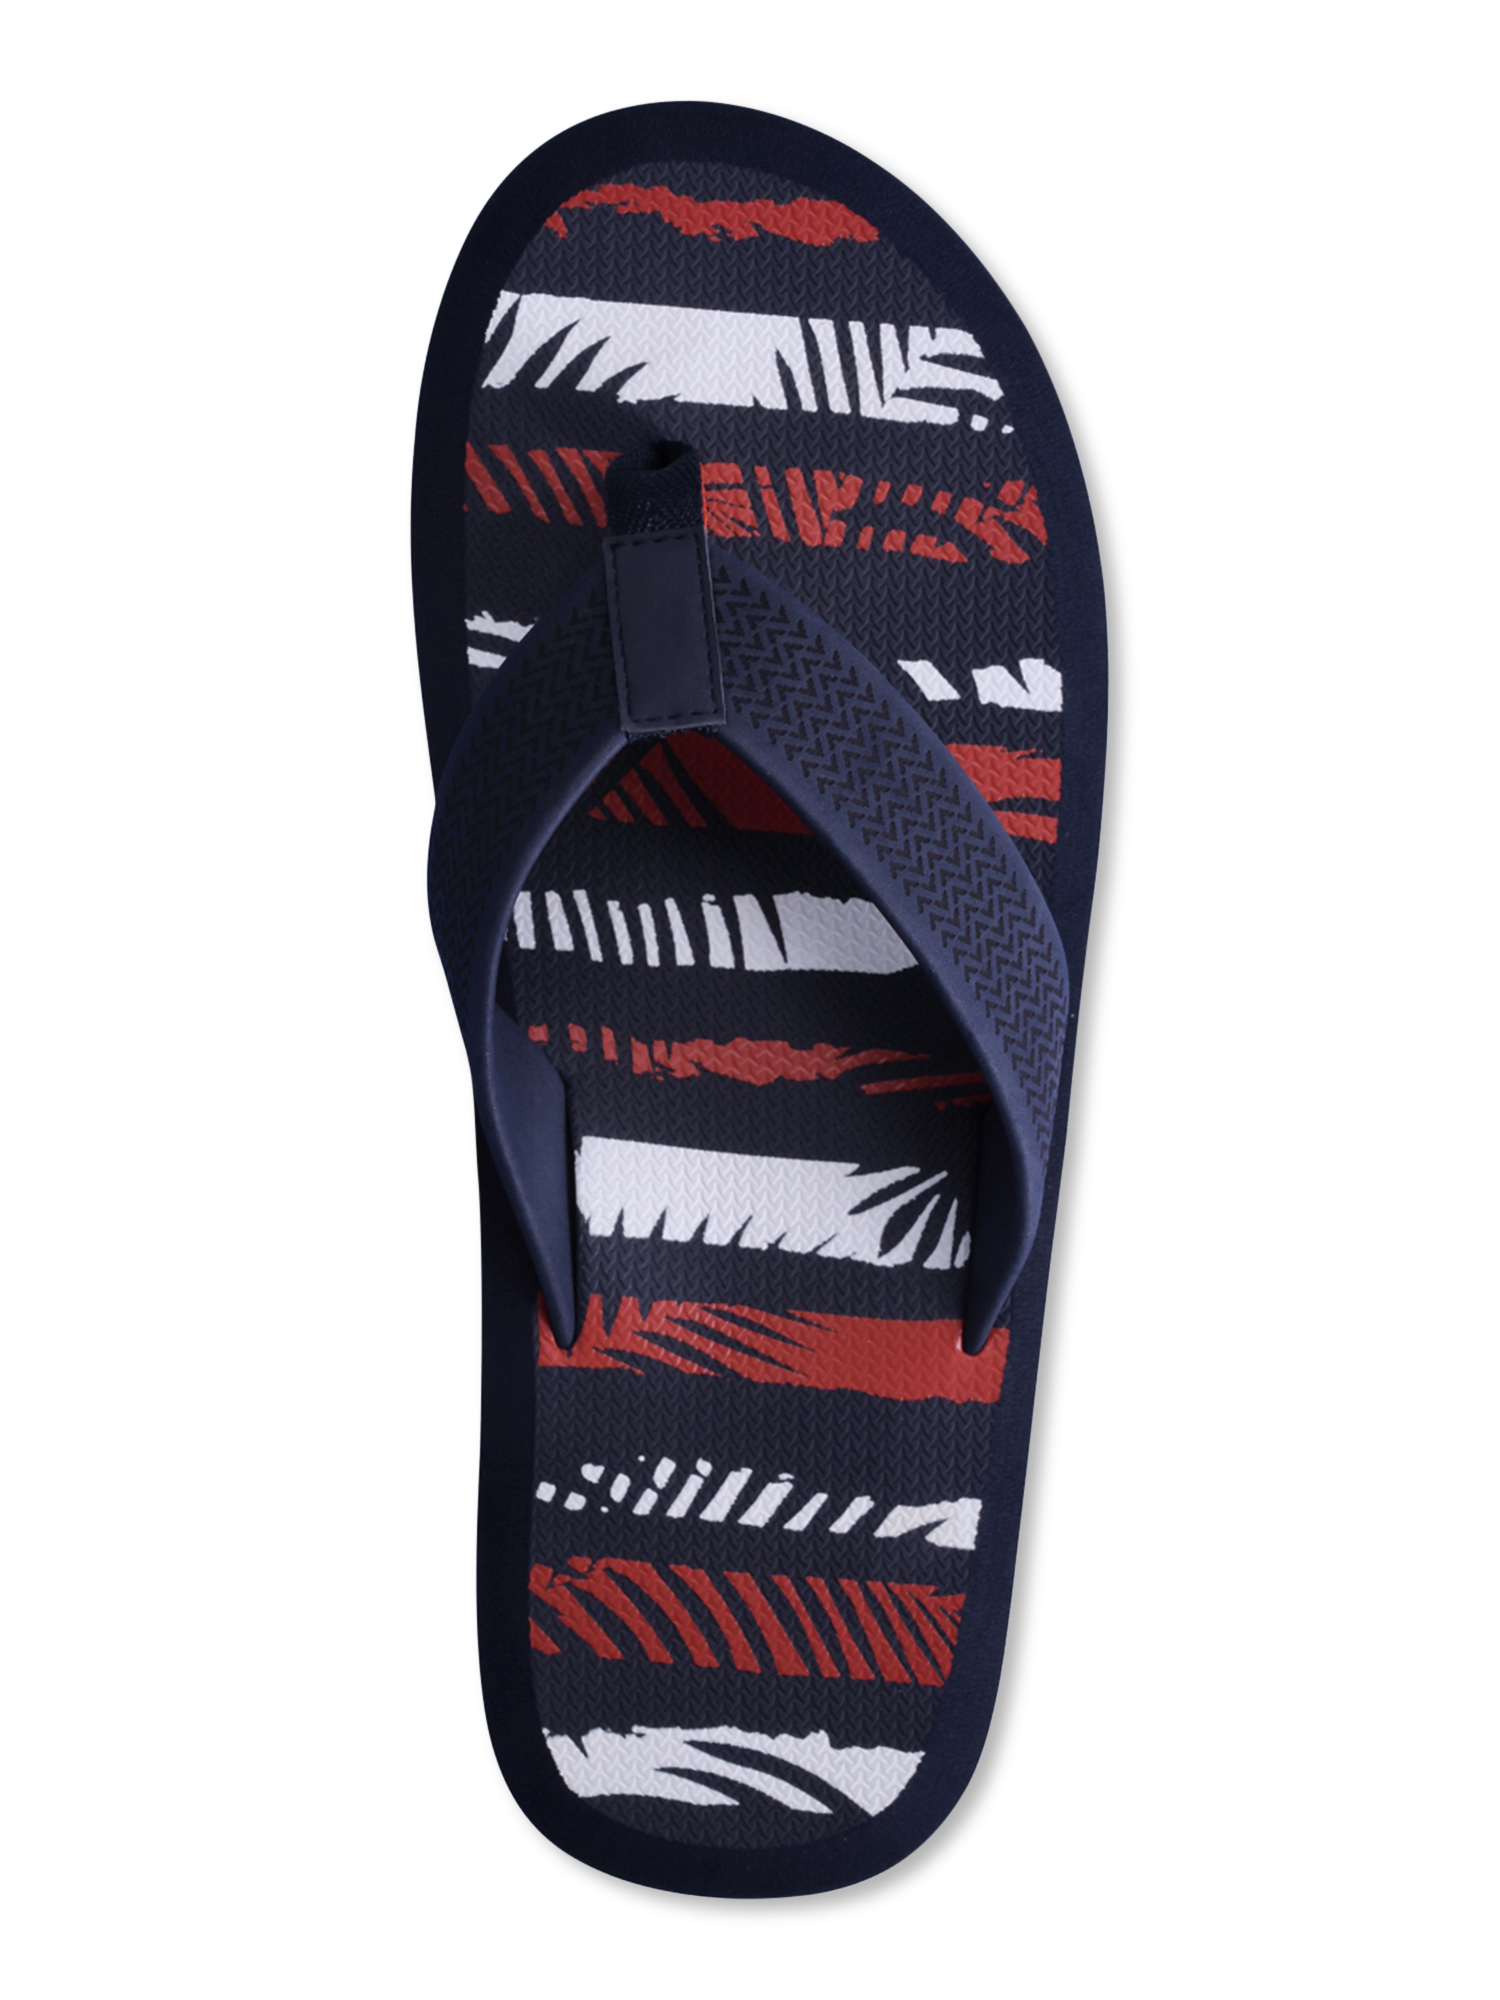 George Men's Ocean Flip Sandals - image 4 of 7